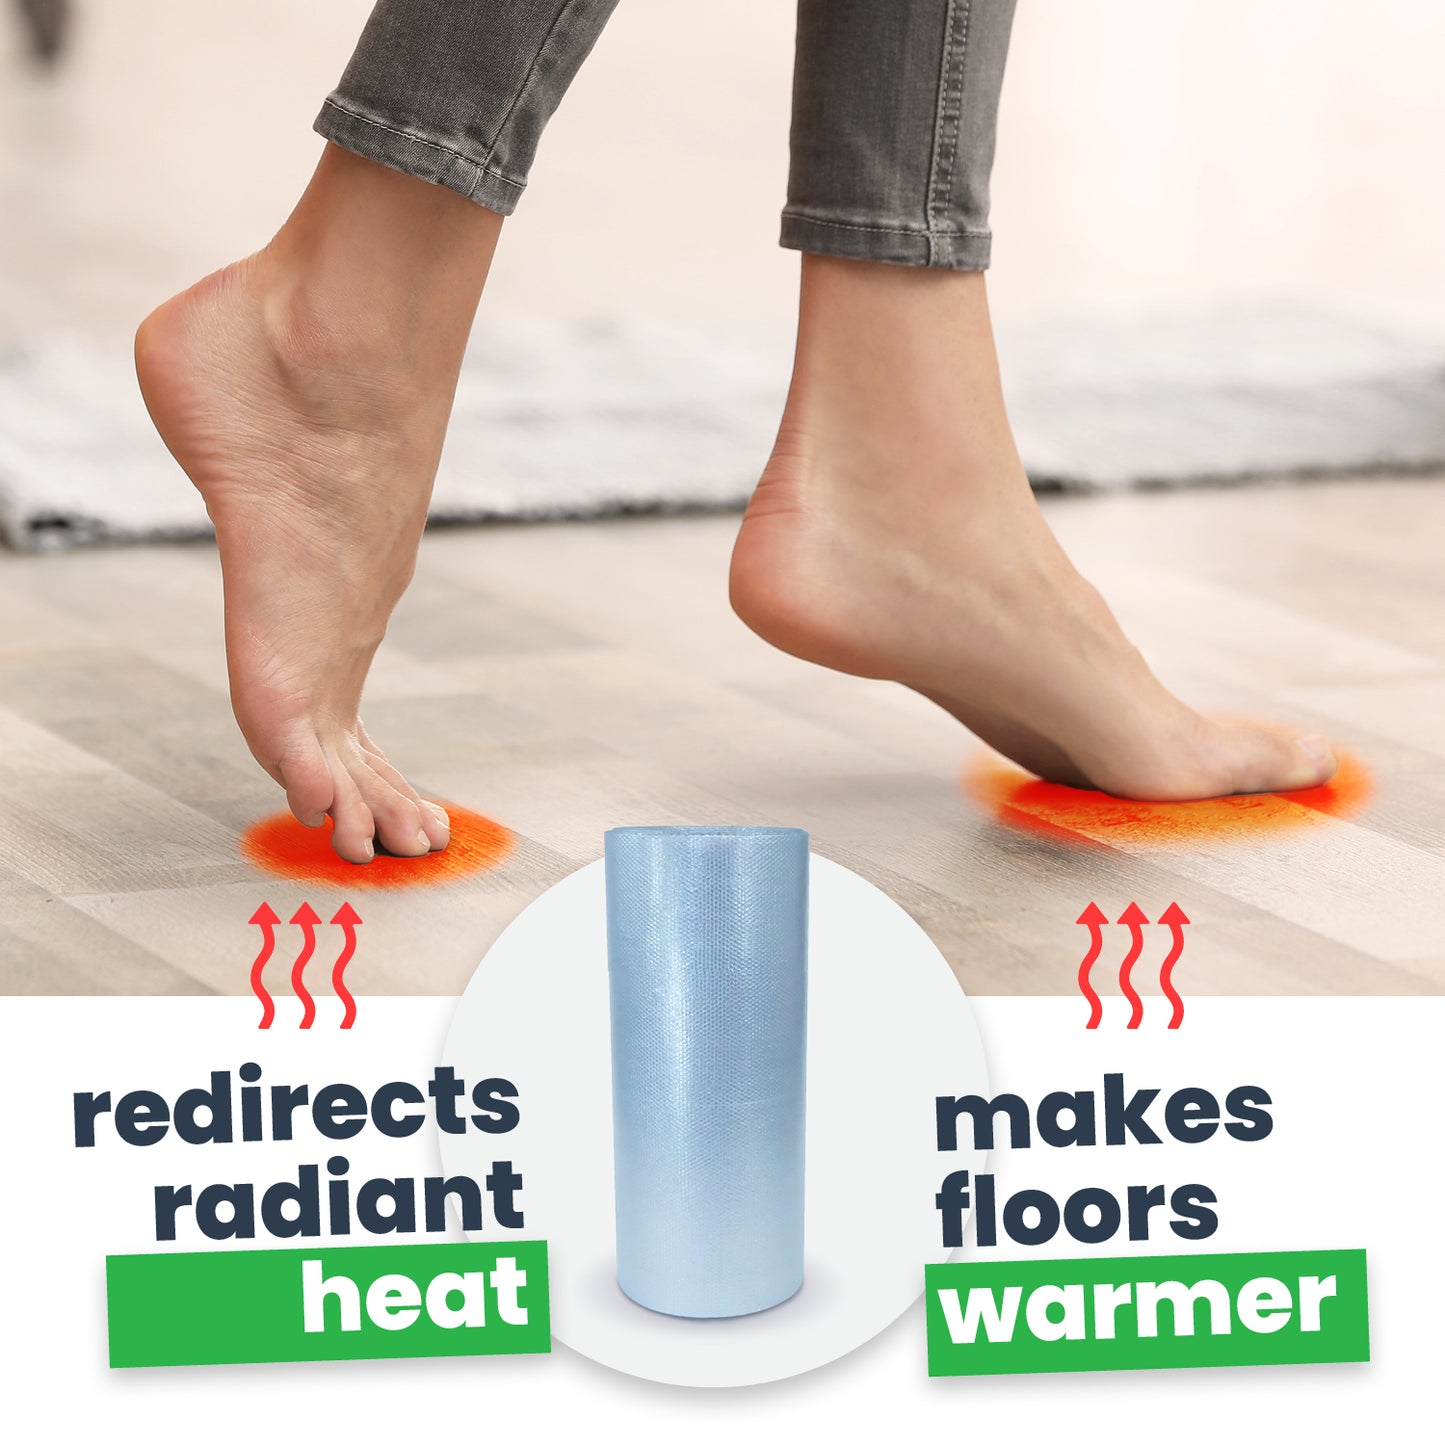 Under slab insulation redirects radiant heat, make floors warmer